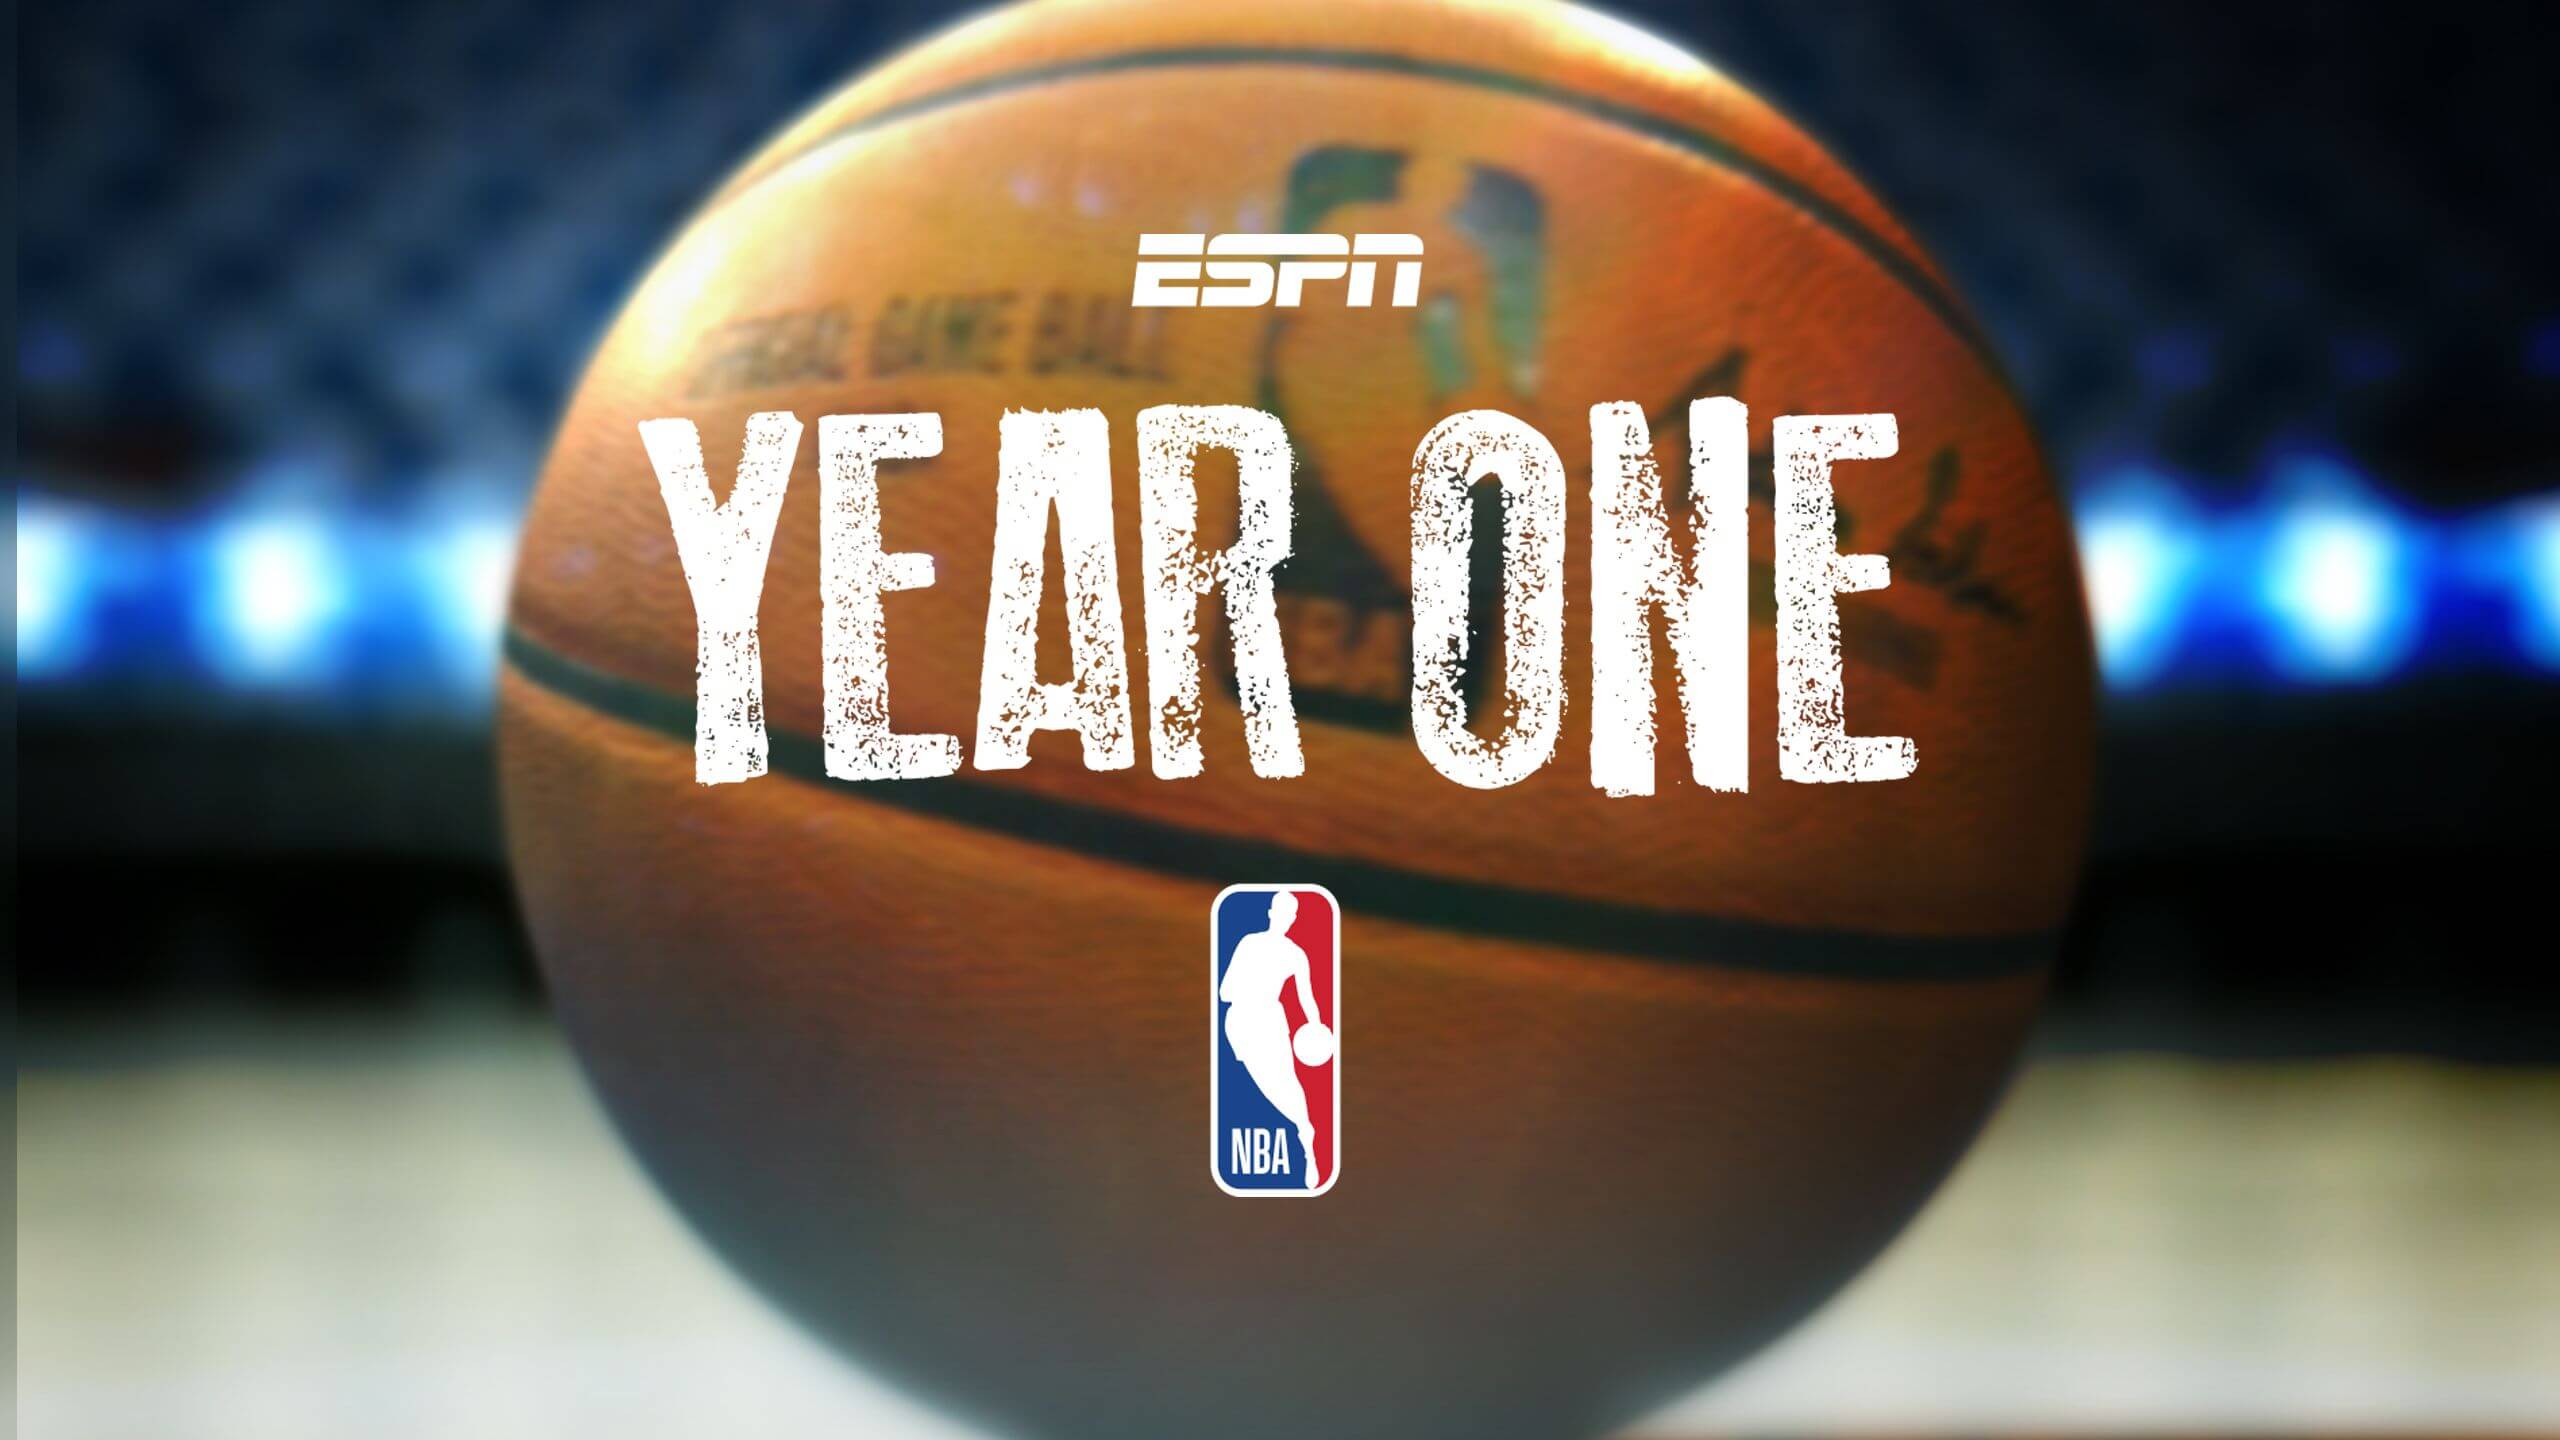 NBA-Year-One-espn-plus-shows